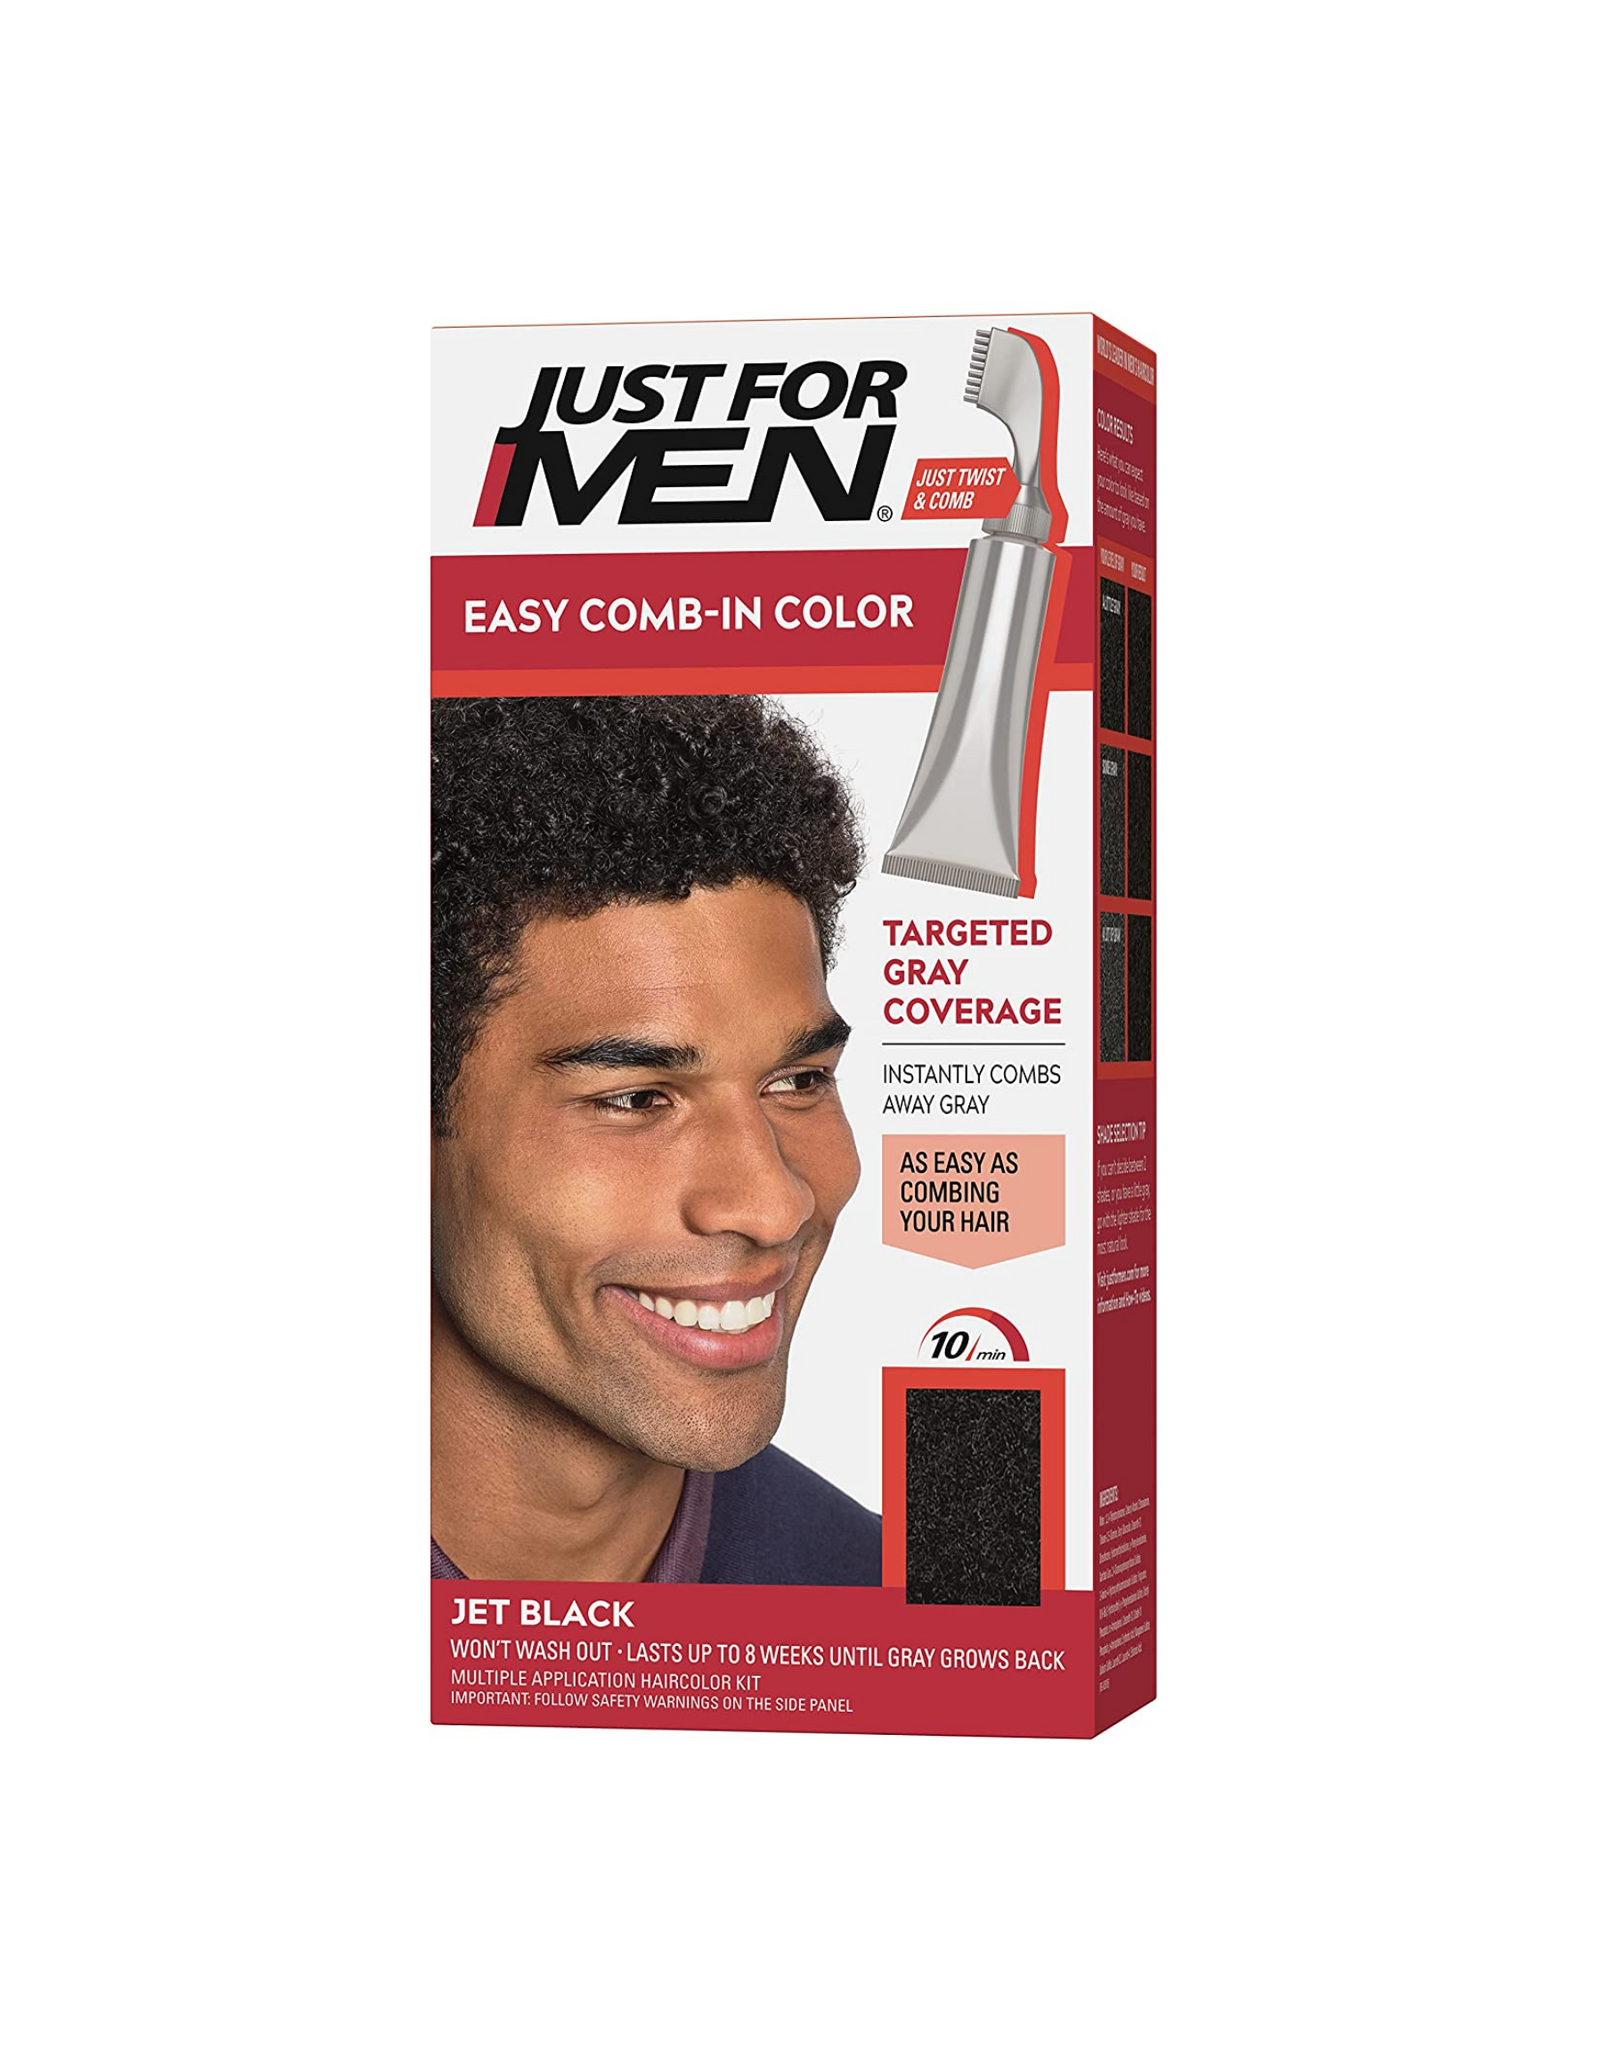 Just For Men Easy Comb-In Color Mens Hair Dye, Jet Black, 1 Ct (Pack of 1)